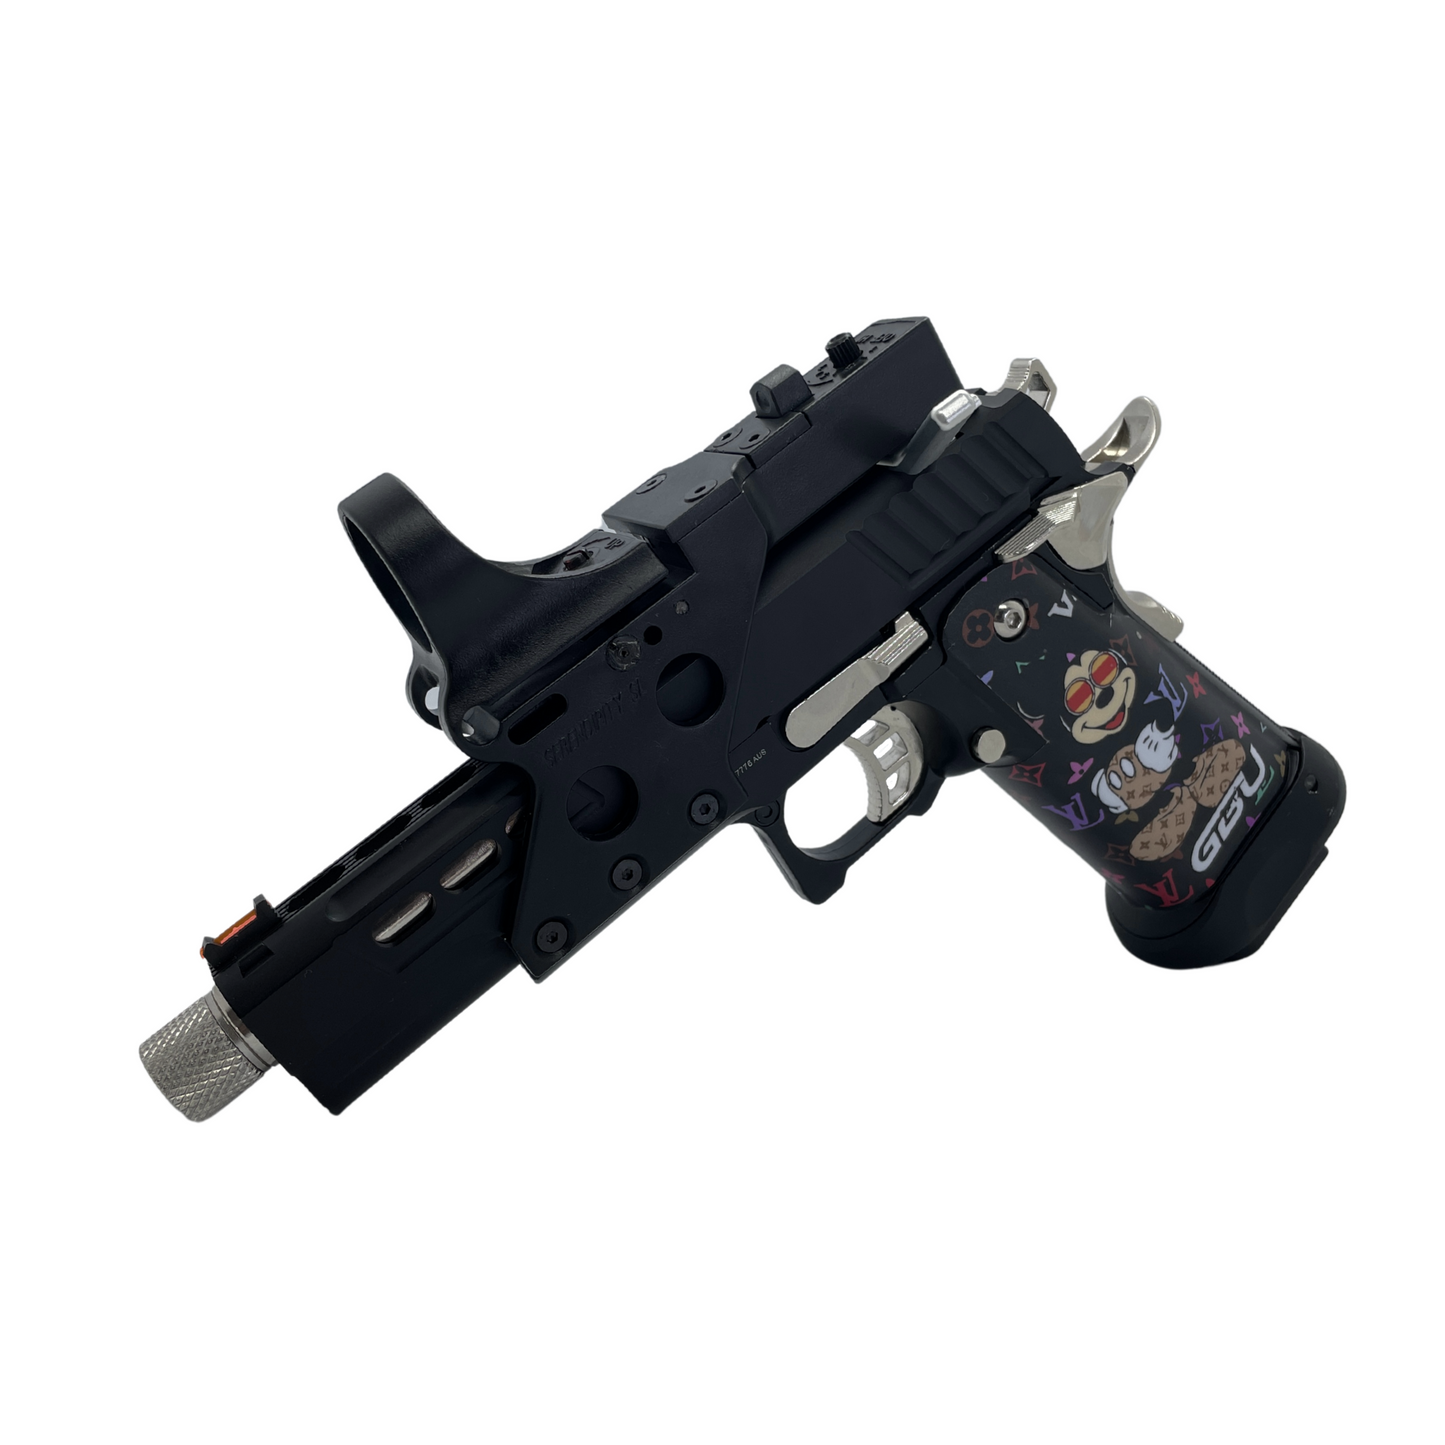 "Swag" 1 of 1 GBU Custom 5.1 G/E Hi-Capa Gas Pistol - Gel Blaster